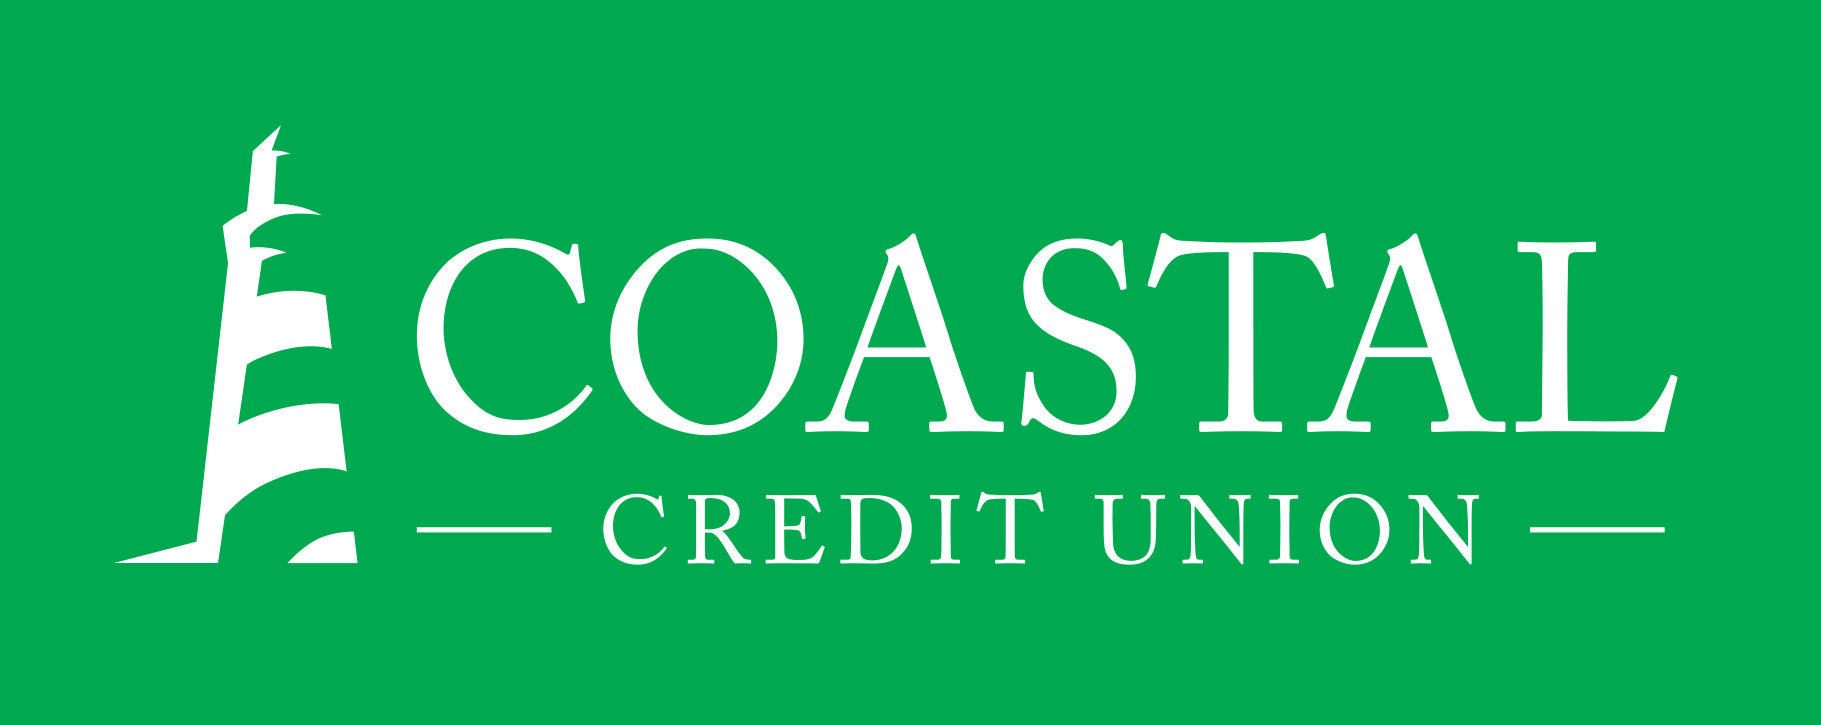 coastal-logo (1).png